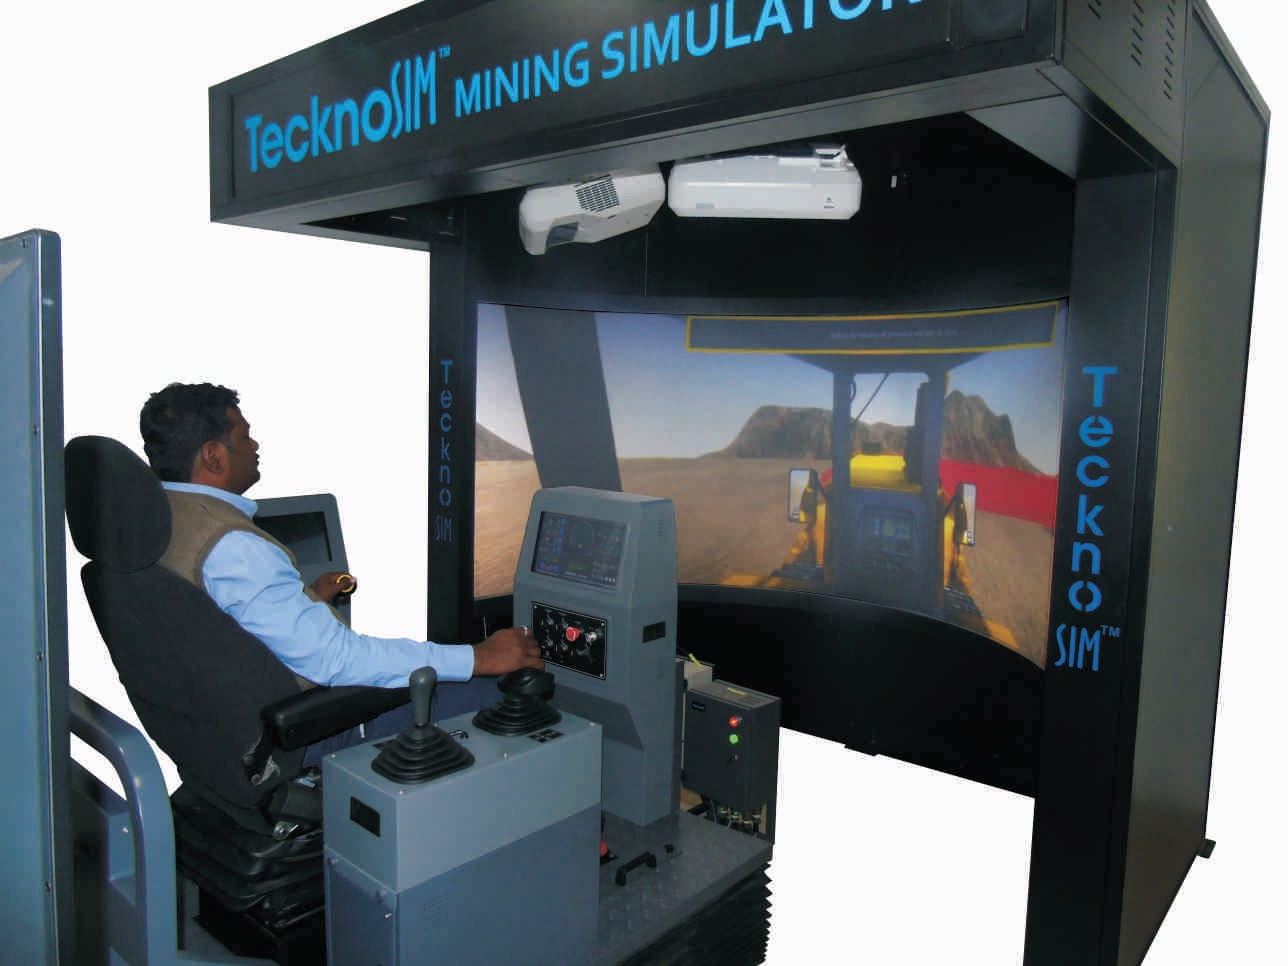 Excavator operator training simulator - tecknosim